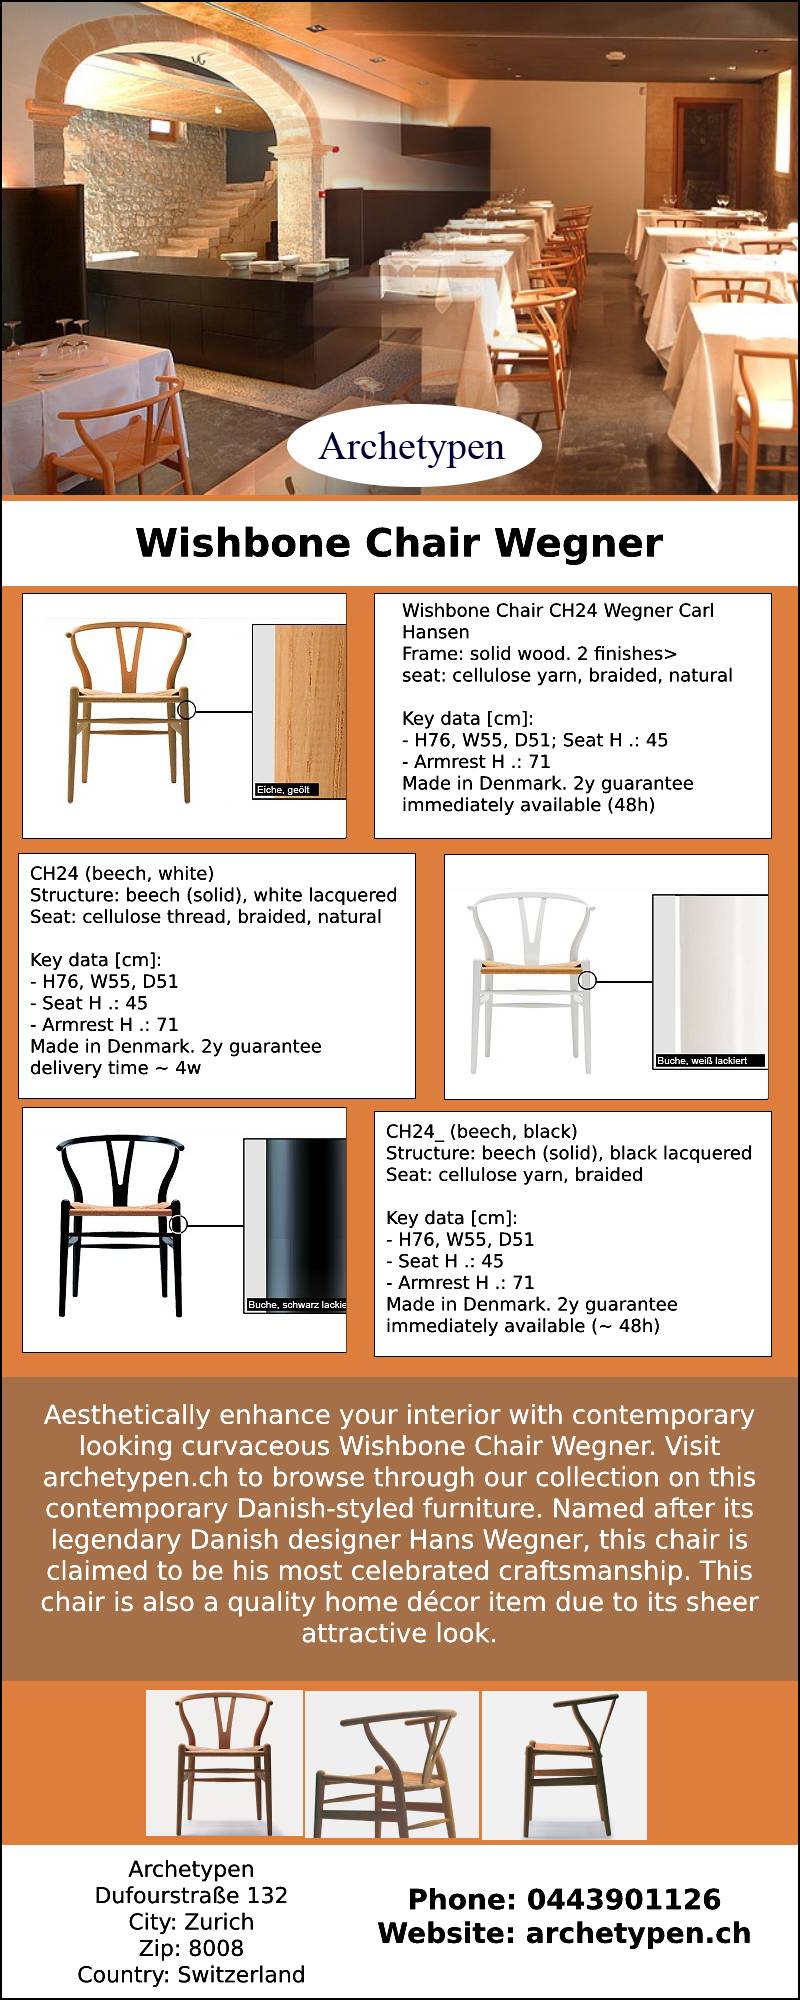 Wishbone Chair Wegner.jpg  by archetypen